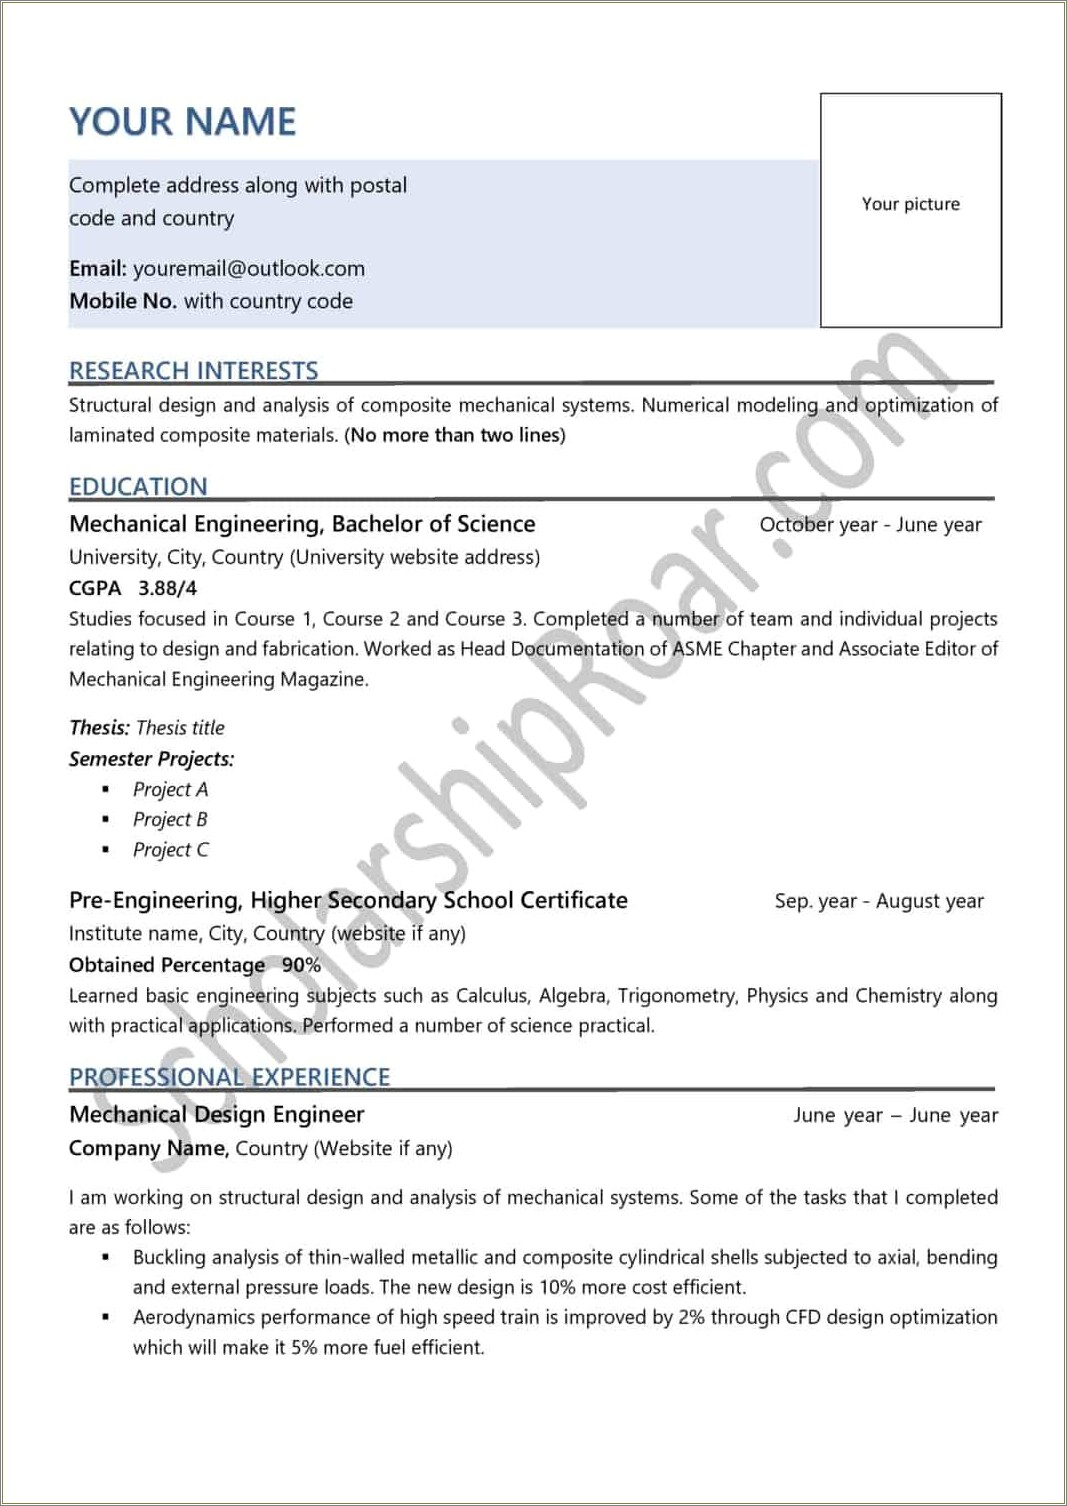 Sample Resume For M.sc Chemistry Experience